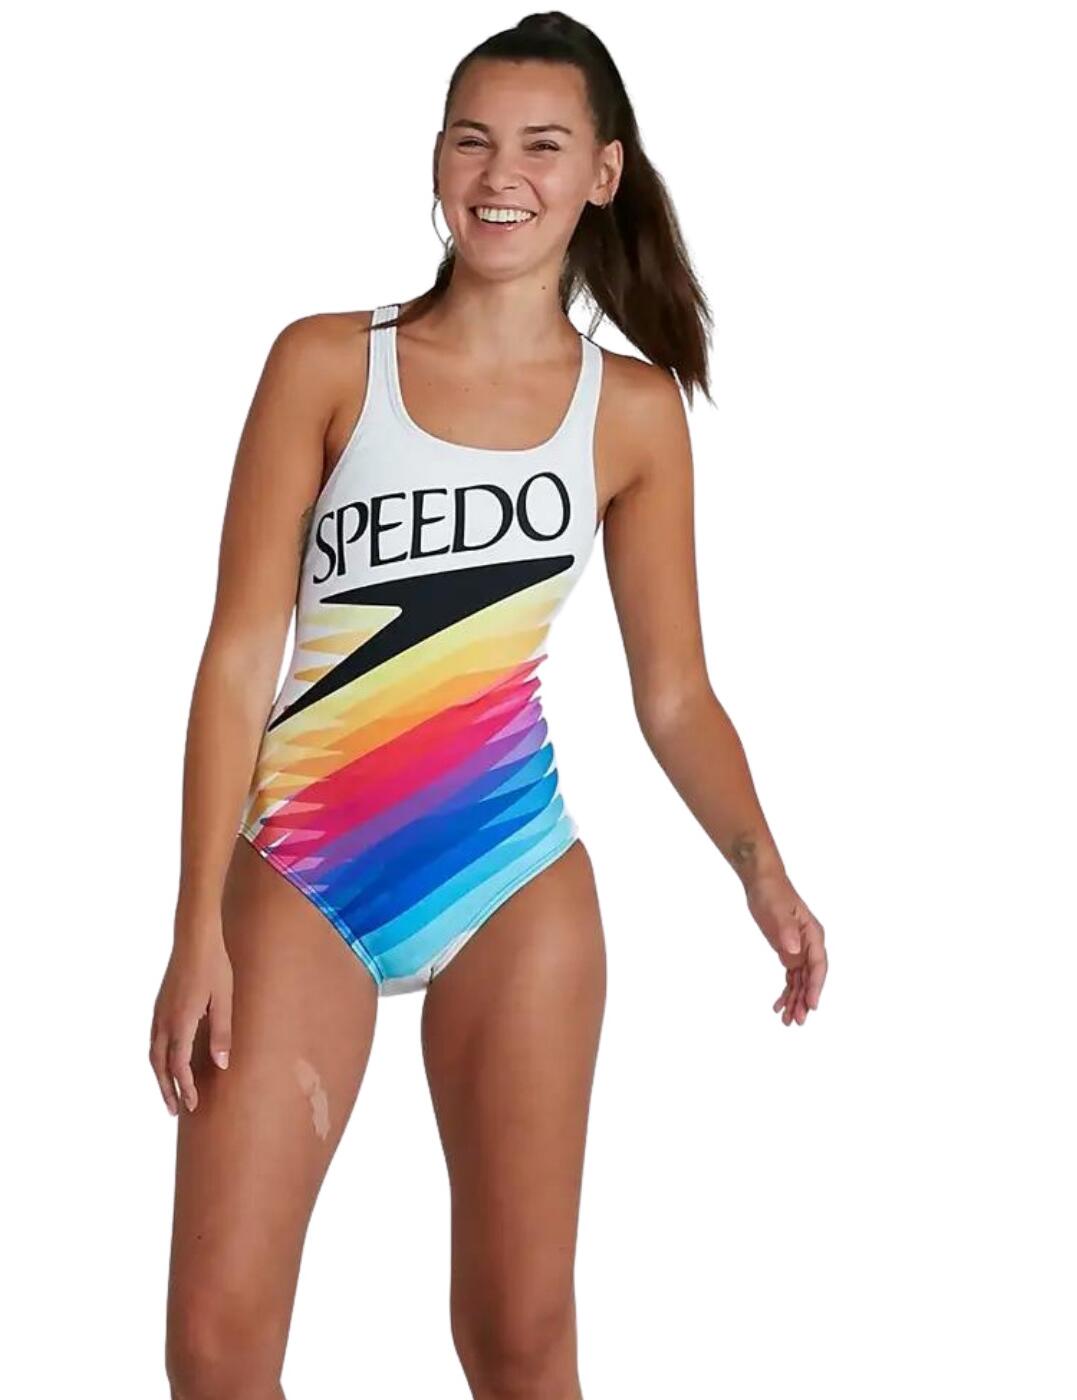 Speedo Retro Digital Placement Medallist Swimsuit White/Black